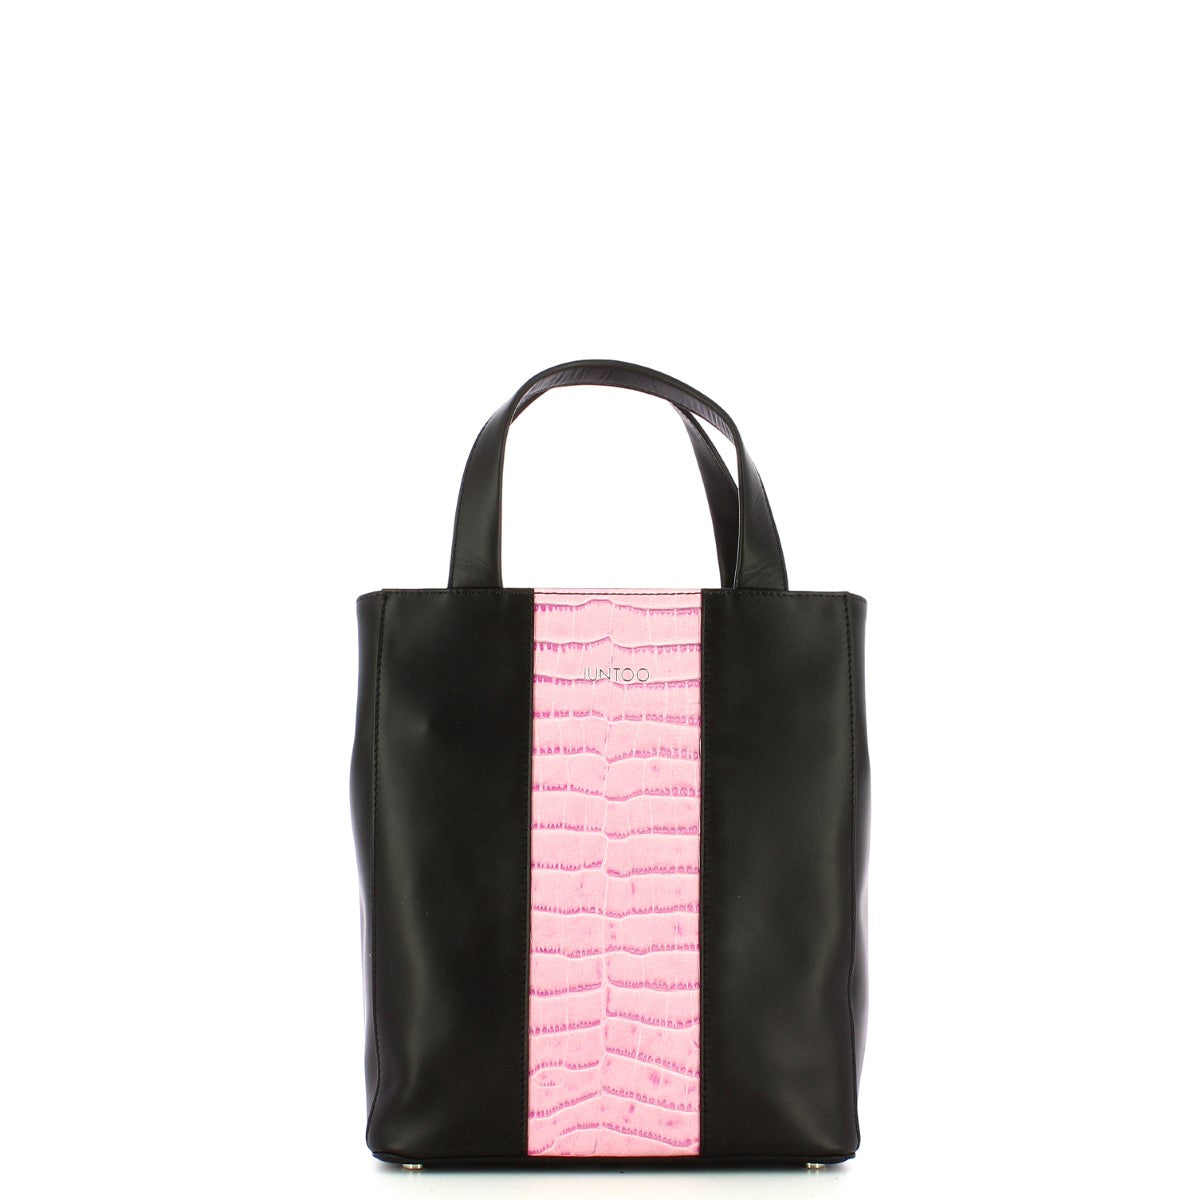 Iuntoo - 中型垂直 Gioia 皮革購物包，帶 Cocco 條紋 - 168024 - NERO/LILLA